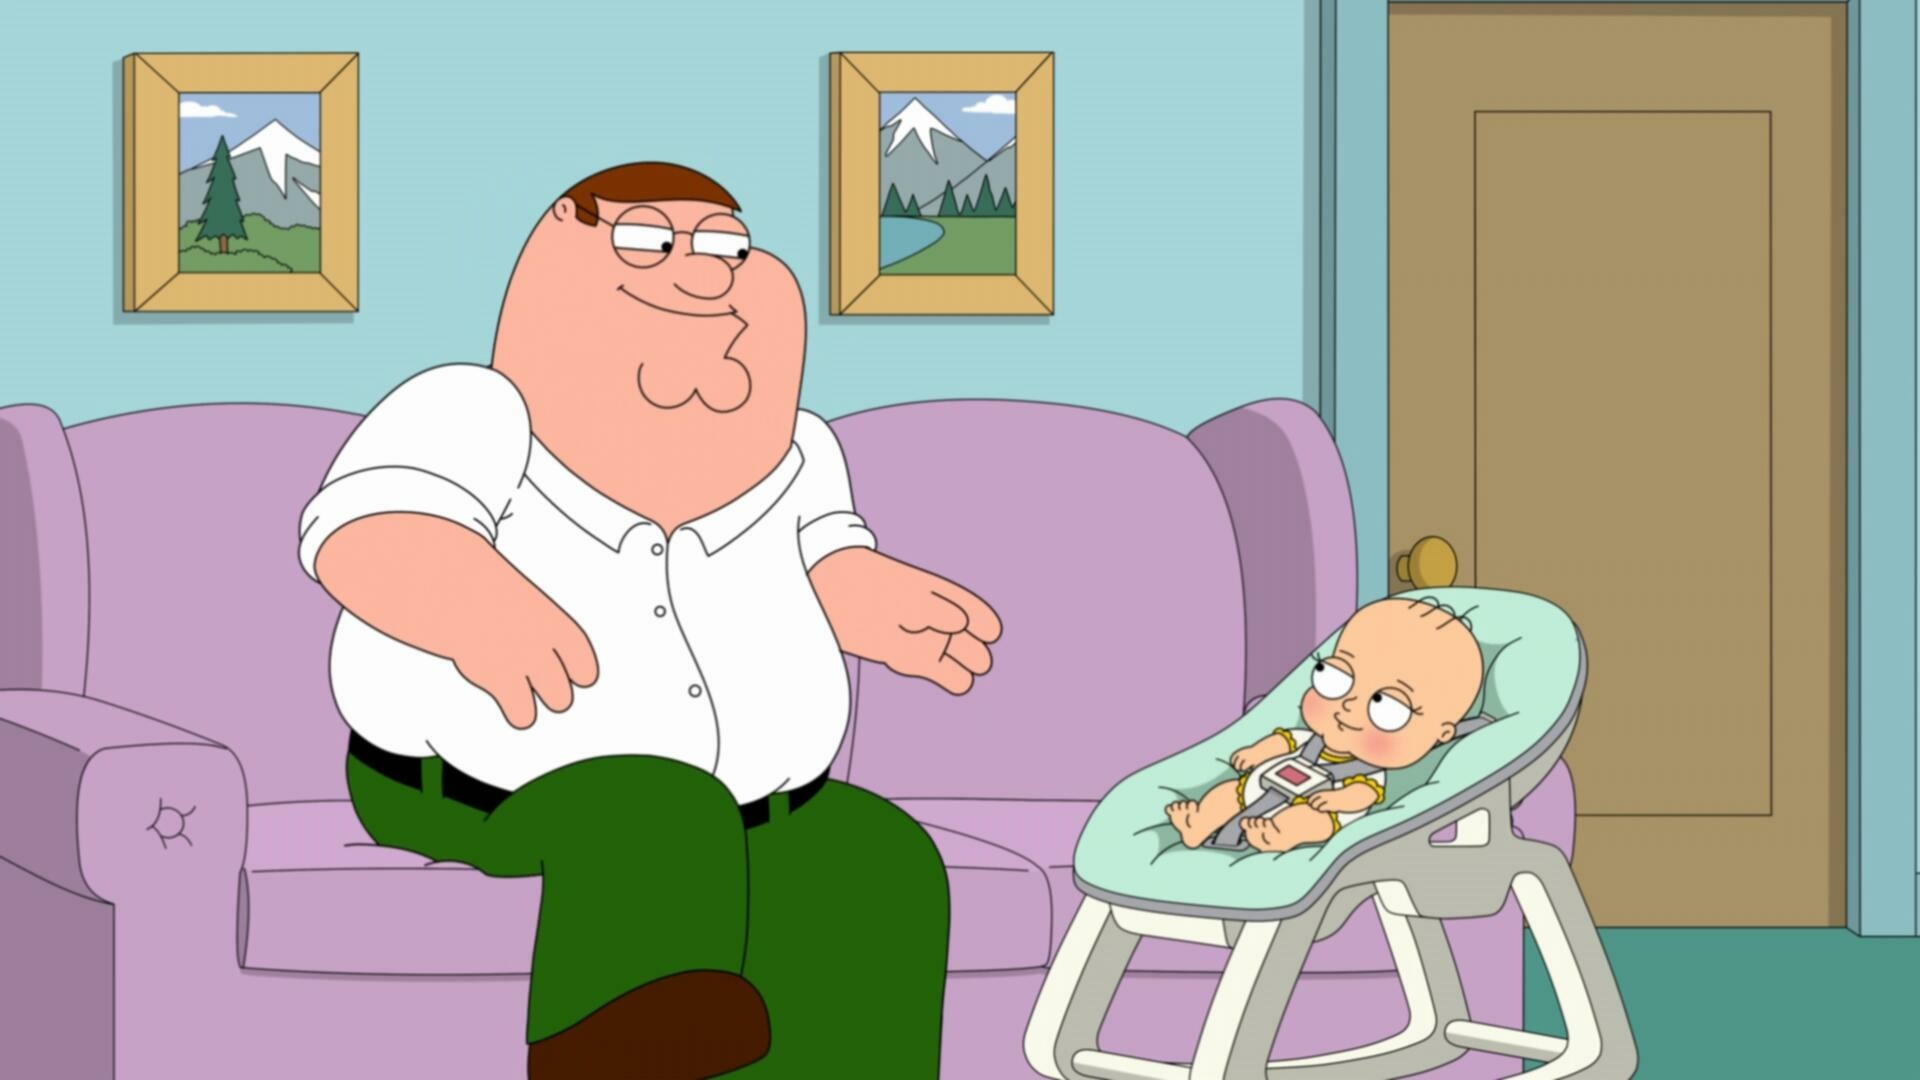 Family Guy S22E01 1080p WEB h264 BAE TGx